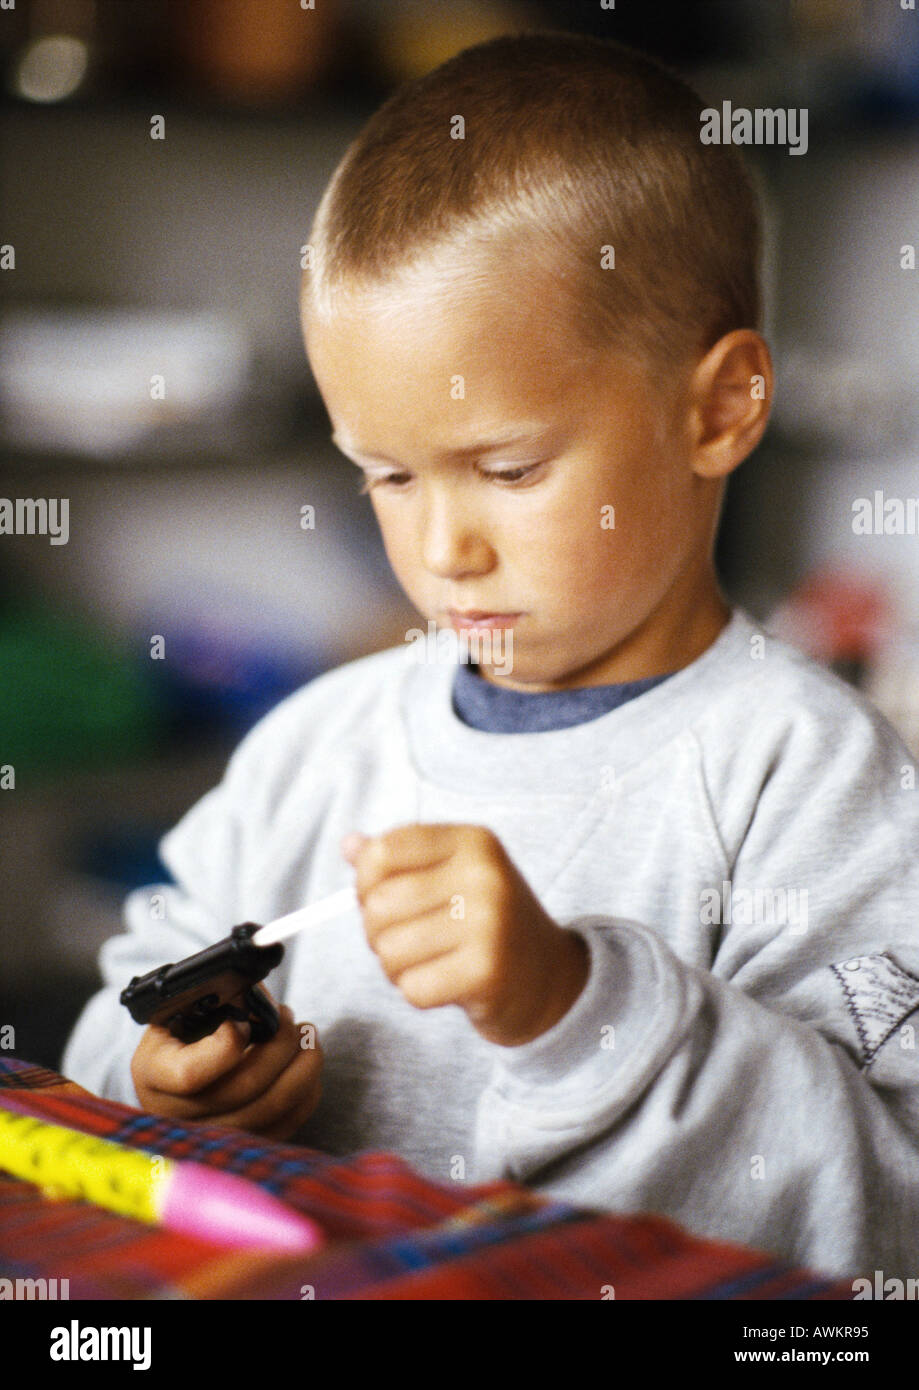 Little boy holding toy gun Stock Photo